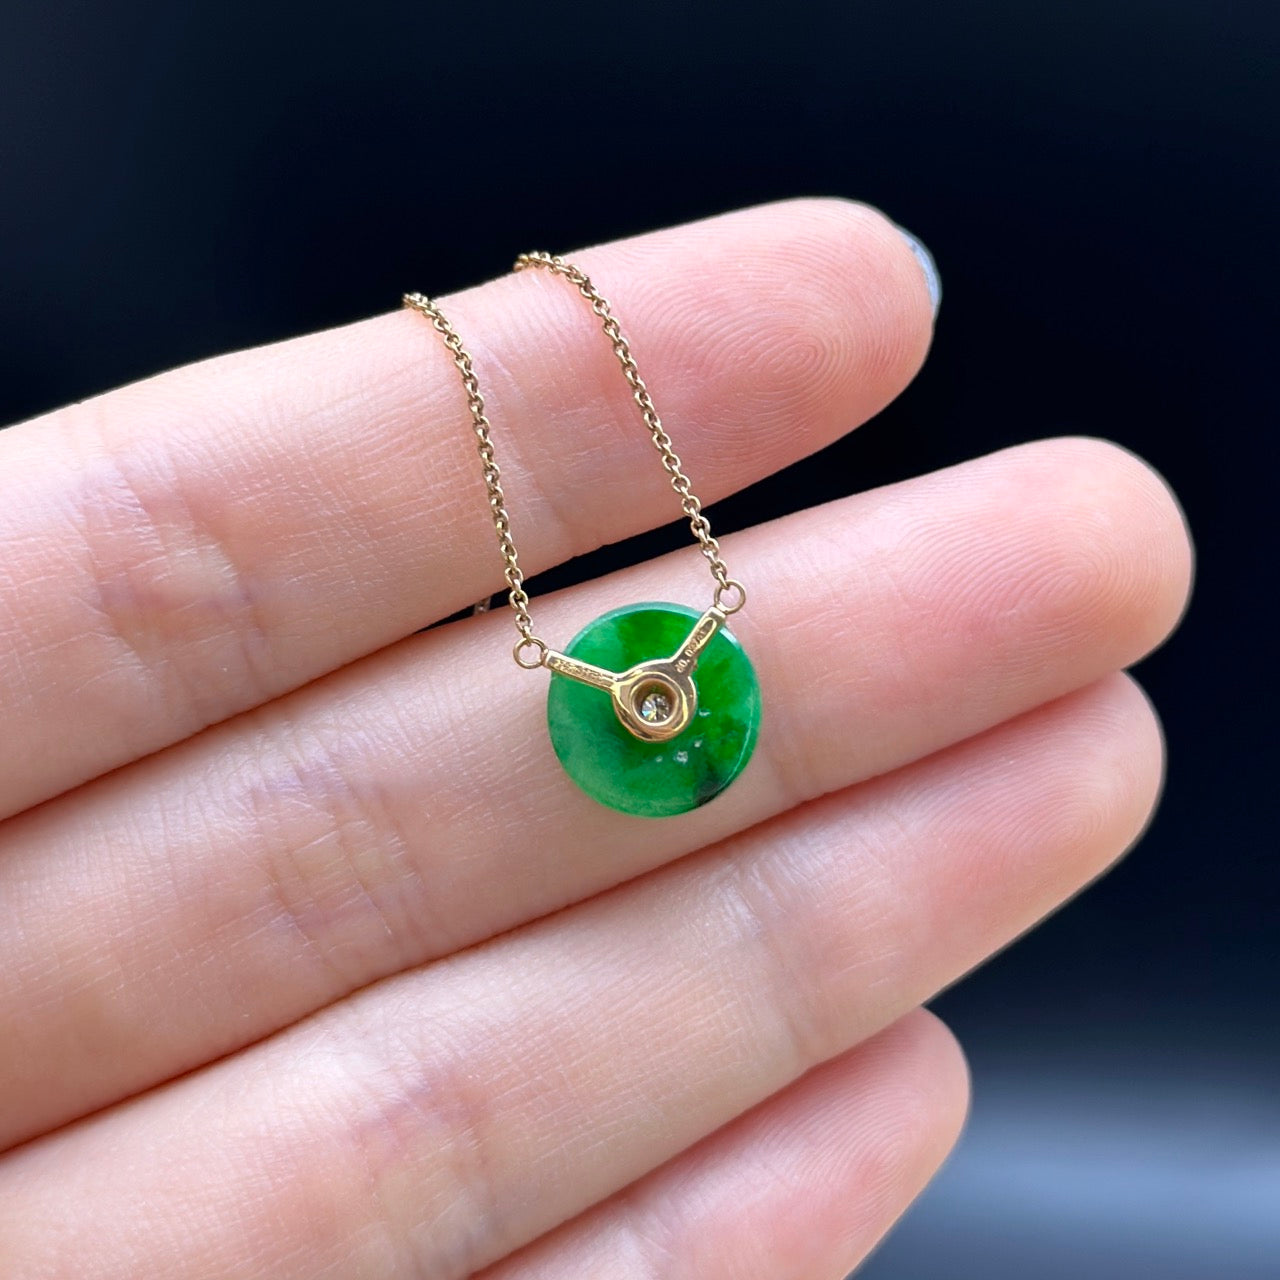 RealJade "Lucky Button" 18k Rose Gold Jadeite jade Diamond Pendant Necklace